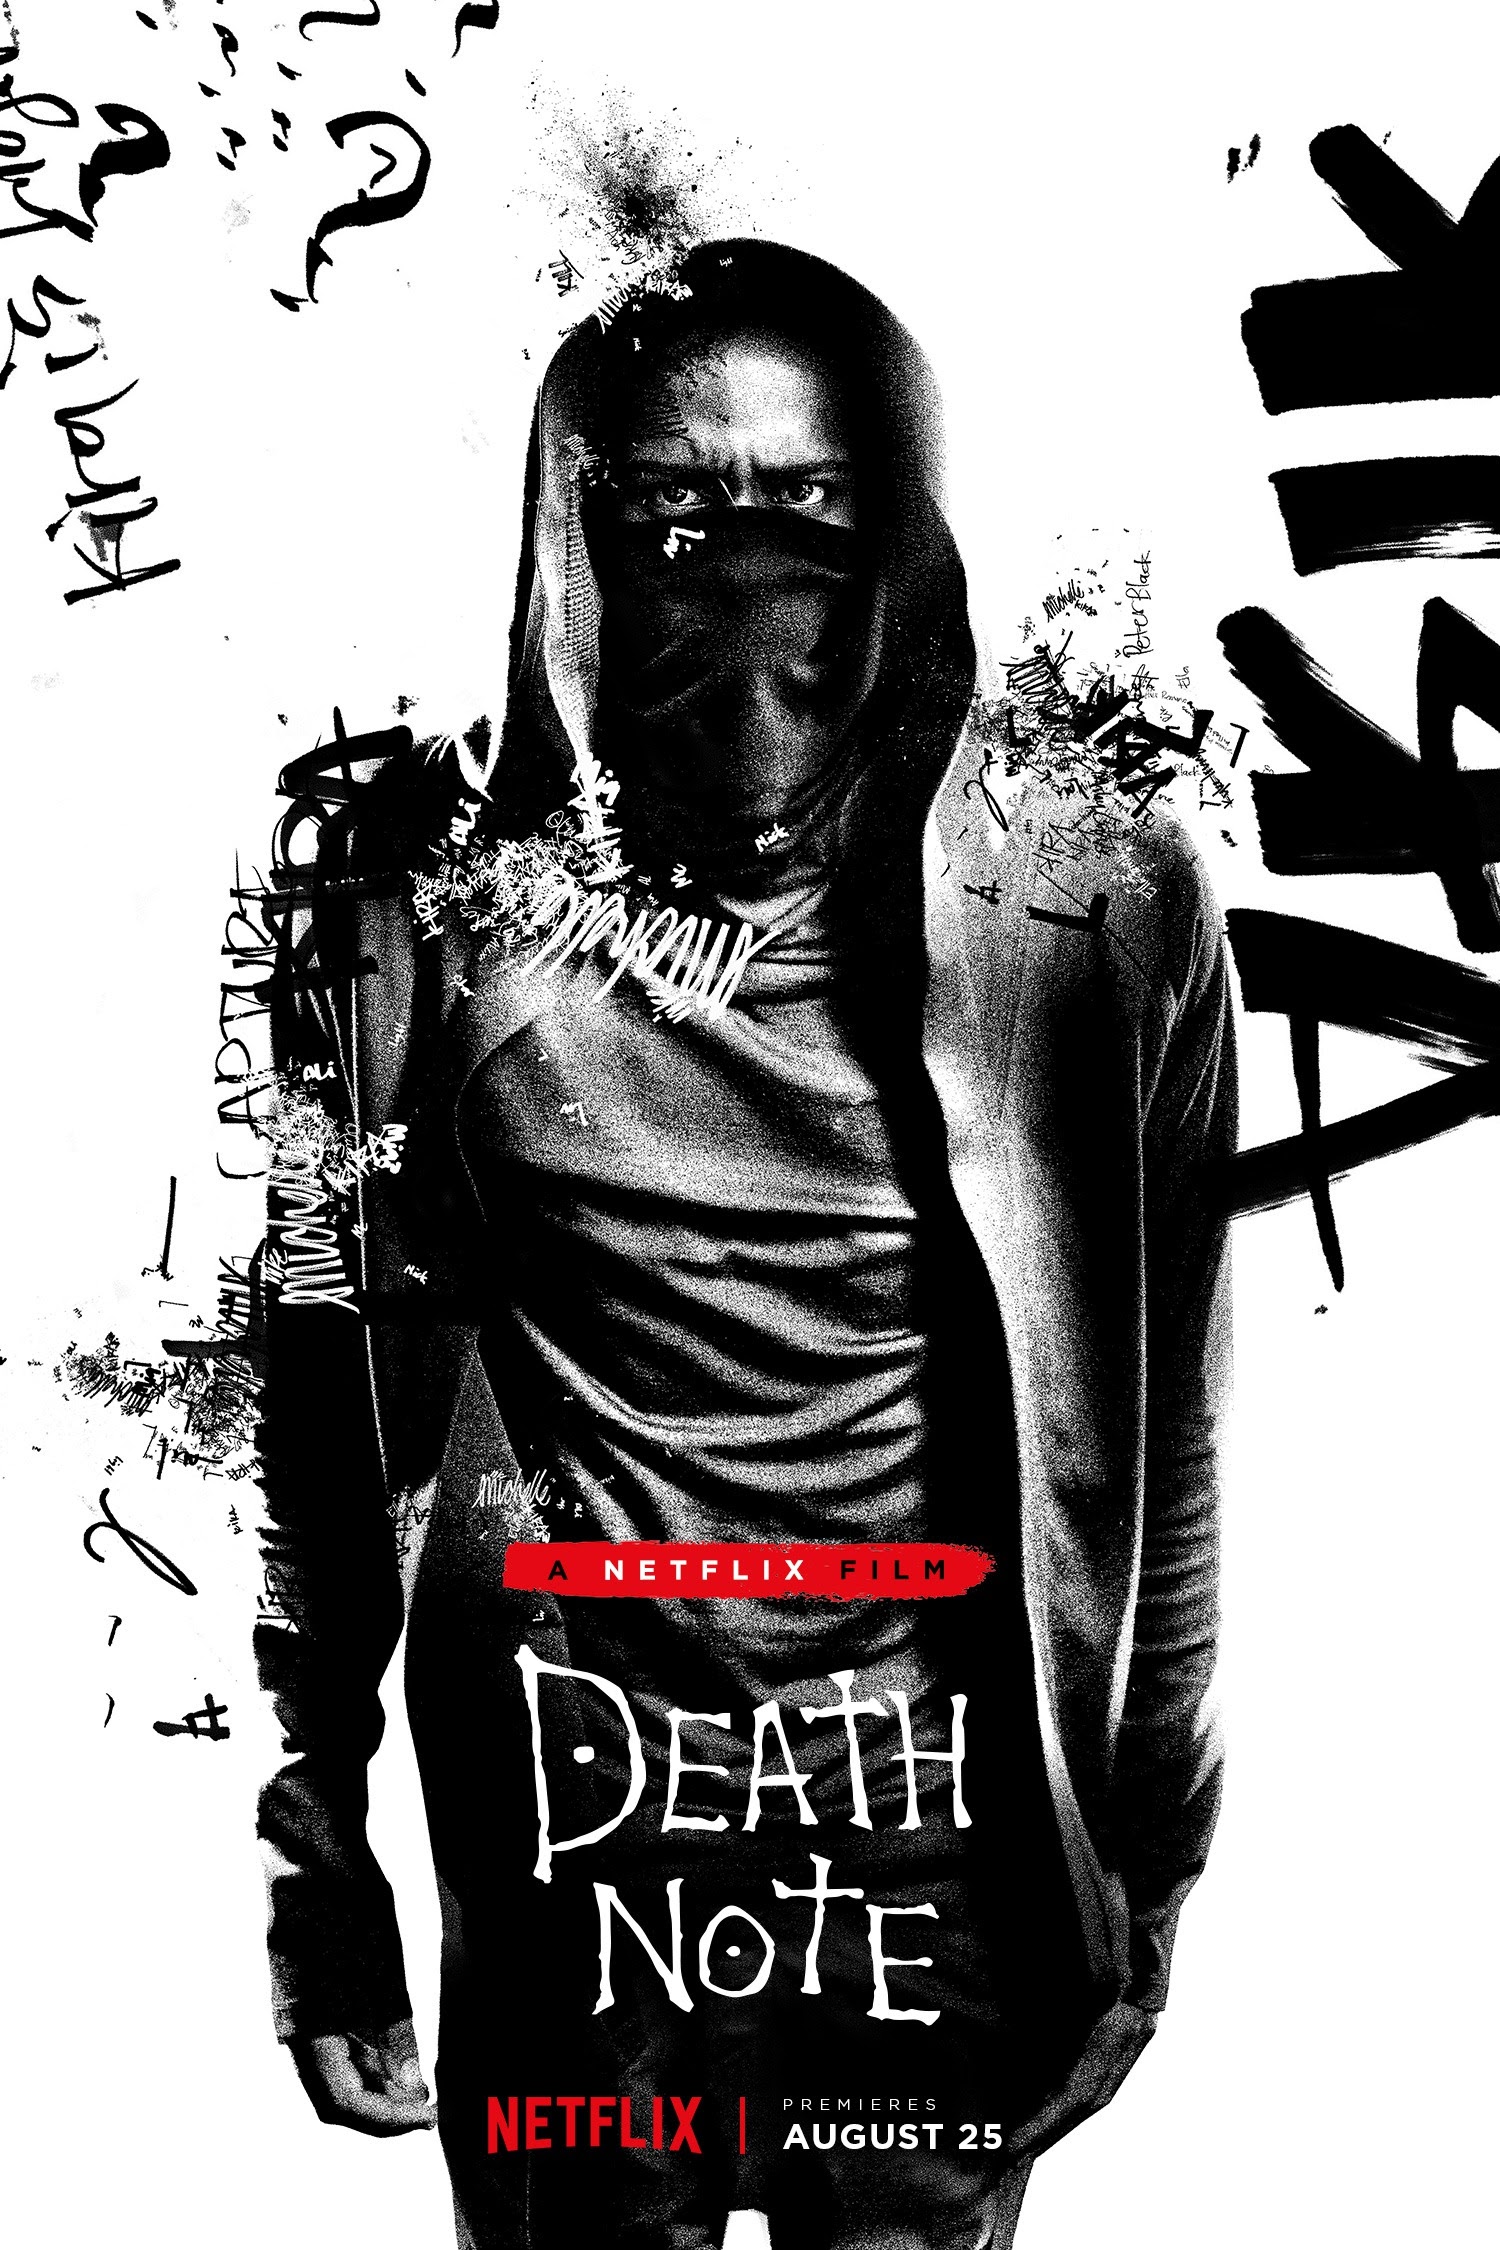 Death Note ハリウッド版実写映画 デスノート が 死神リュークにうながされて キラへと生まれ変わるライトの新世紀の神の正義が実行される本編シーンをリリース Cia Movie News